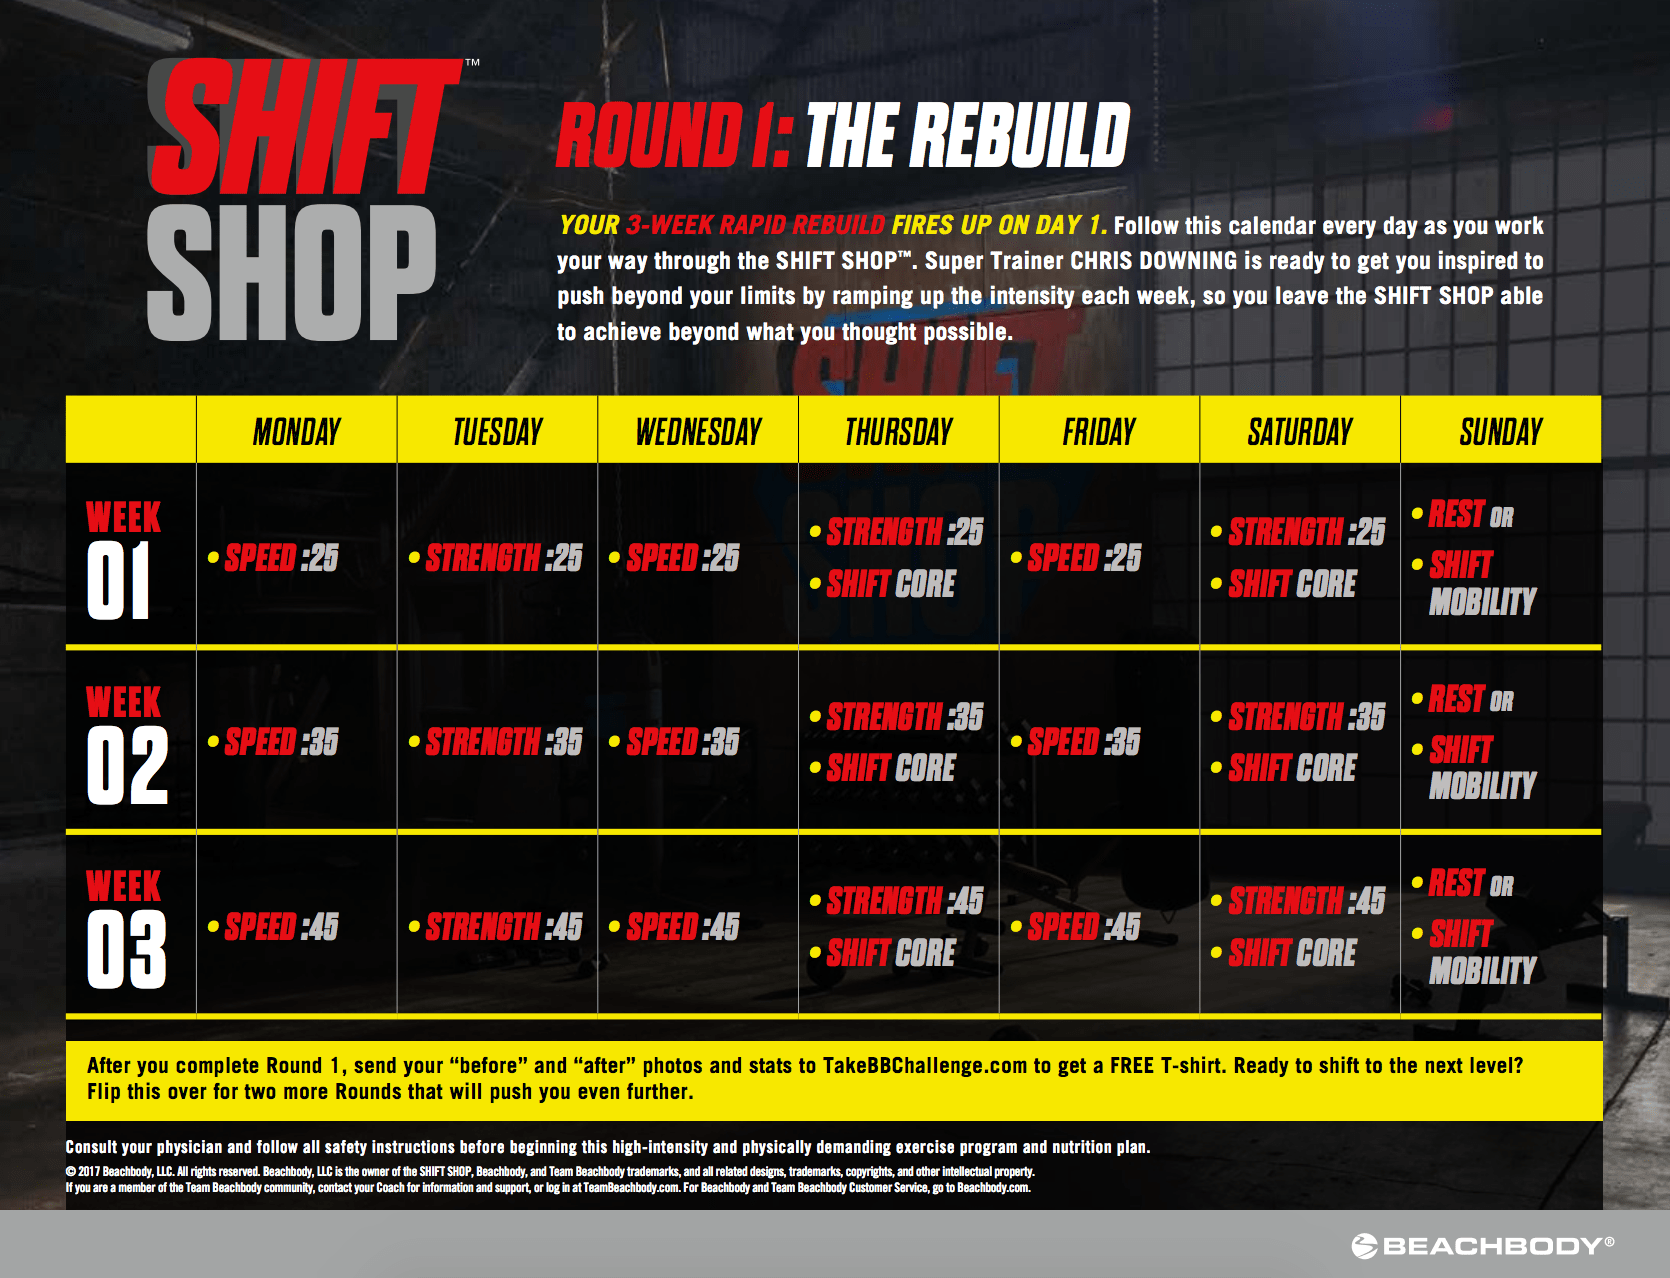 Beachbody Shift Shop Review Workouts, Meal Plan and Calendar Guide